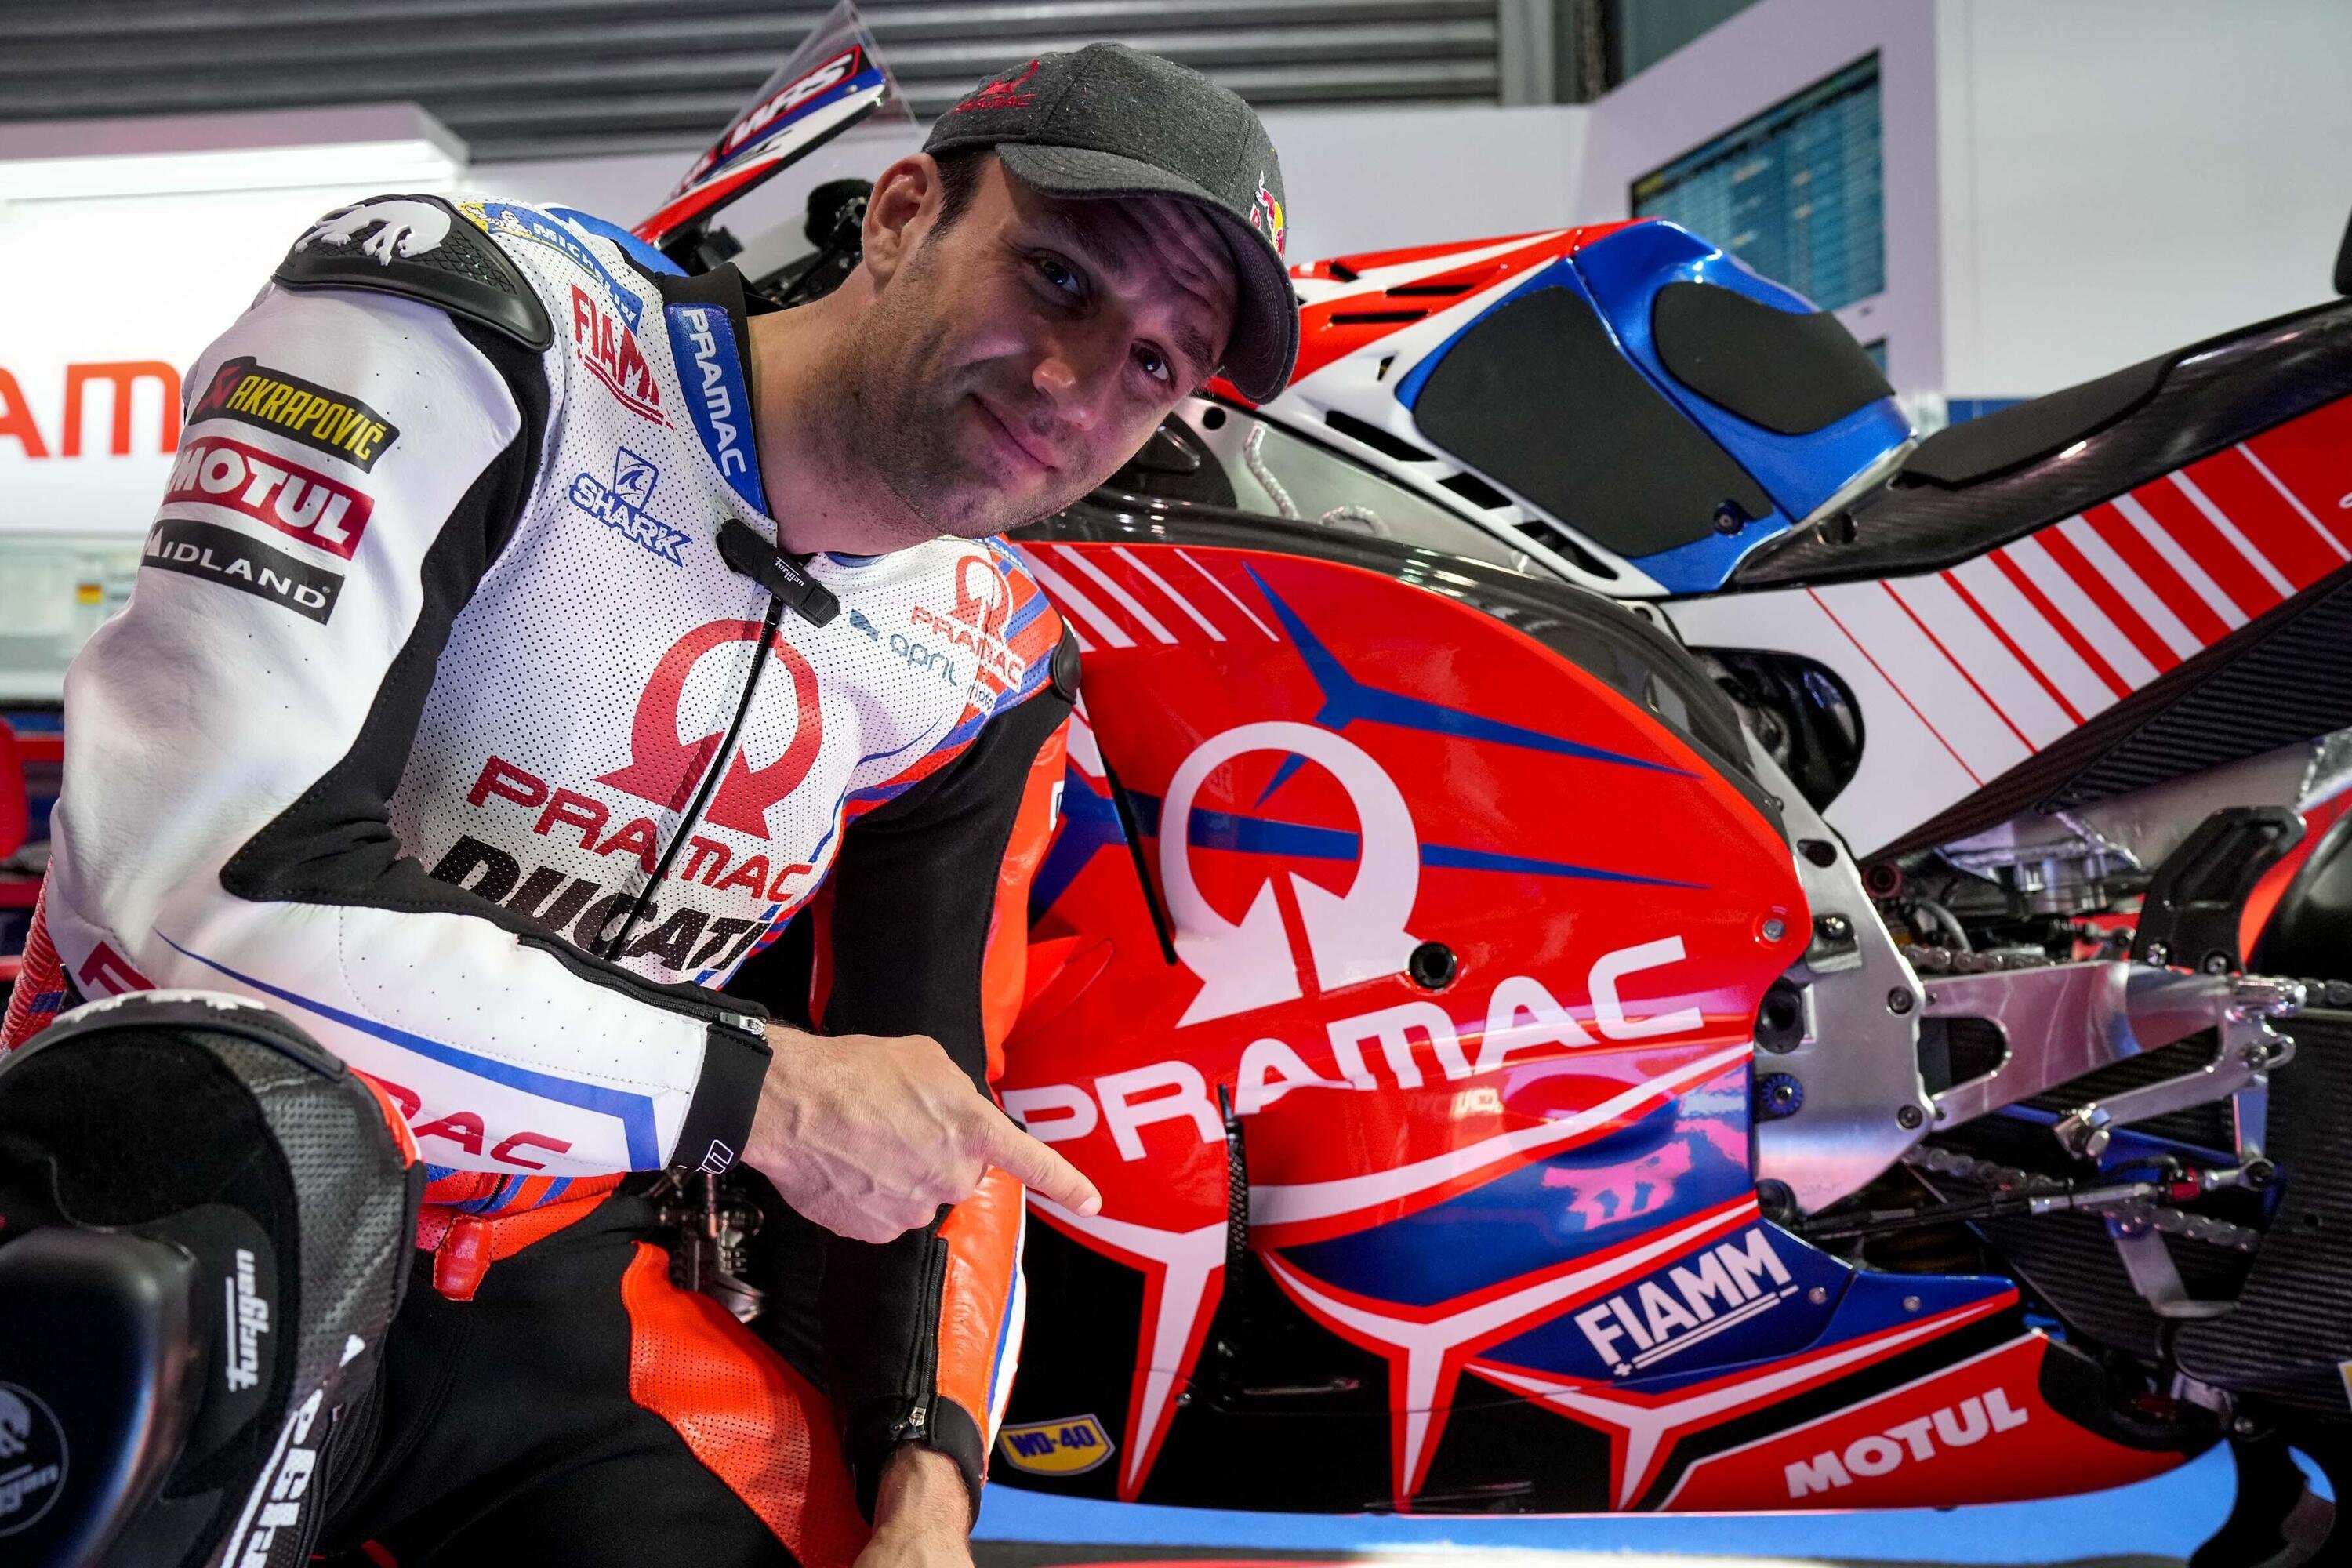 WD-40 e Pramac Racing Ducati rinnovano la partnership tecnica